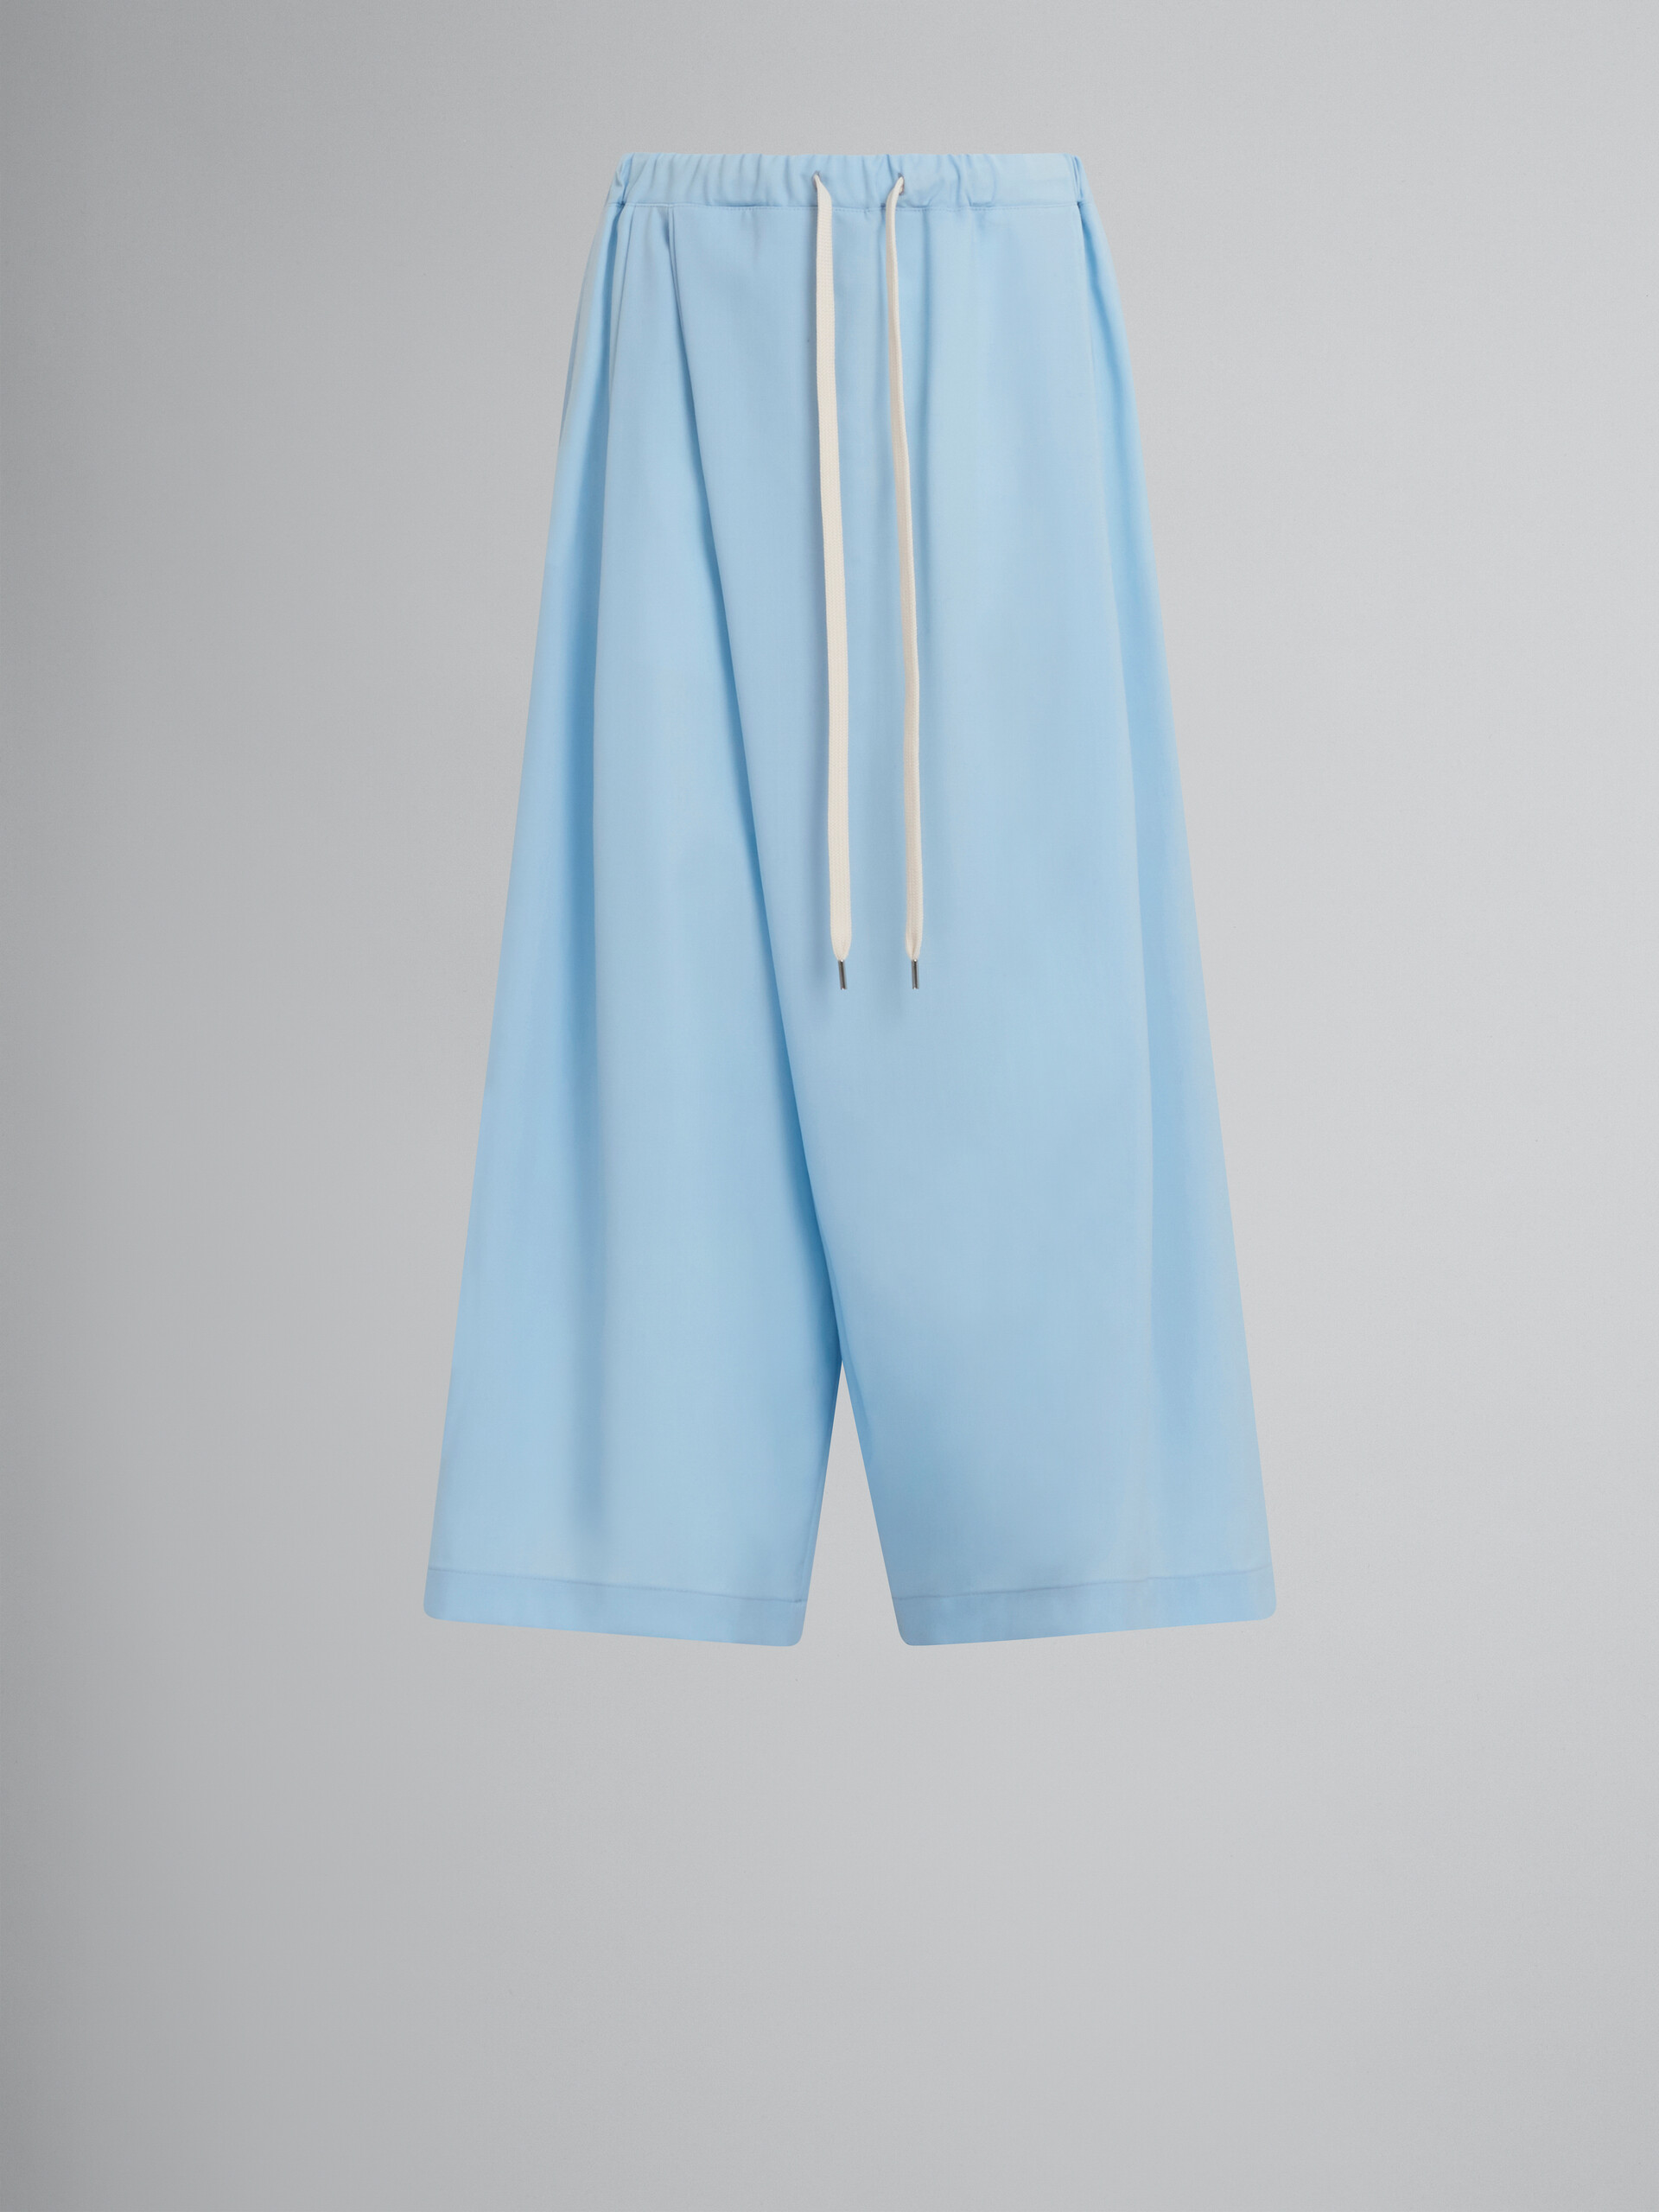 Pantaloni karate in fresco lana azzurro - Pantaloni - Image 1